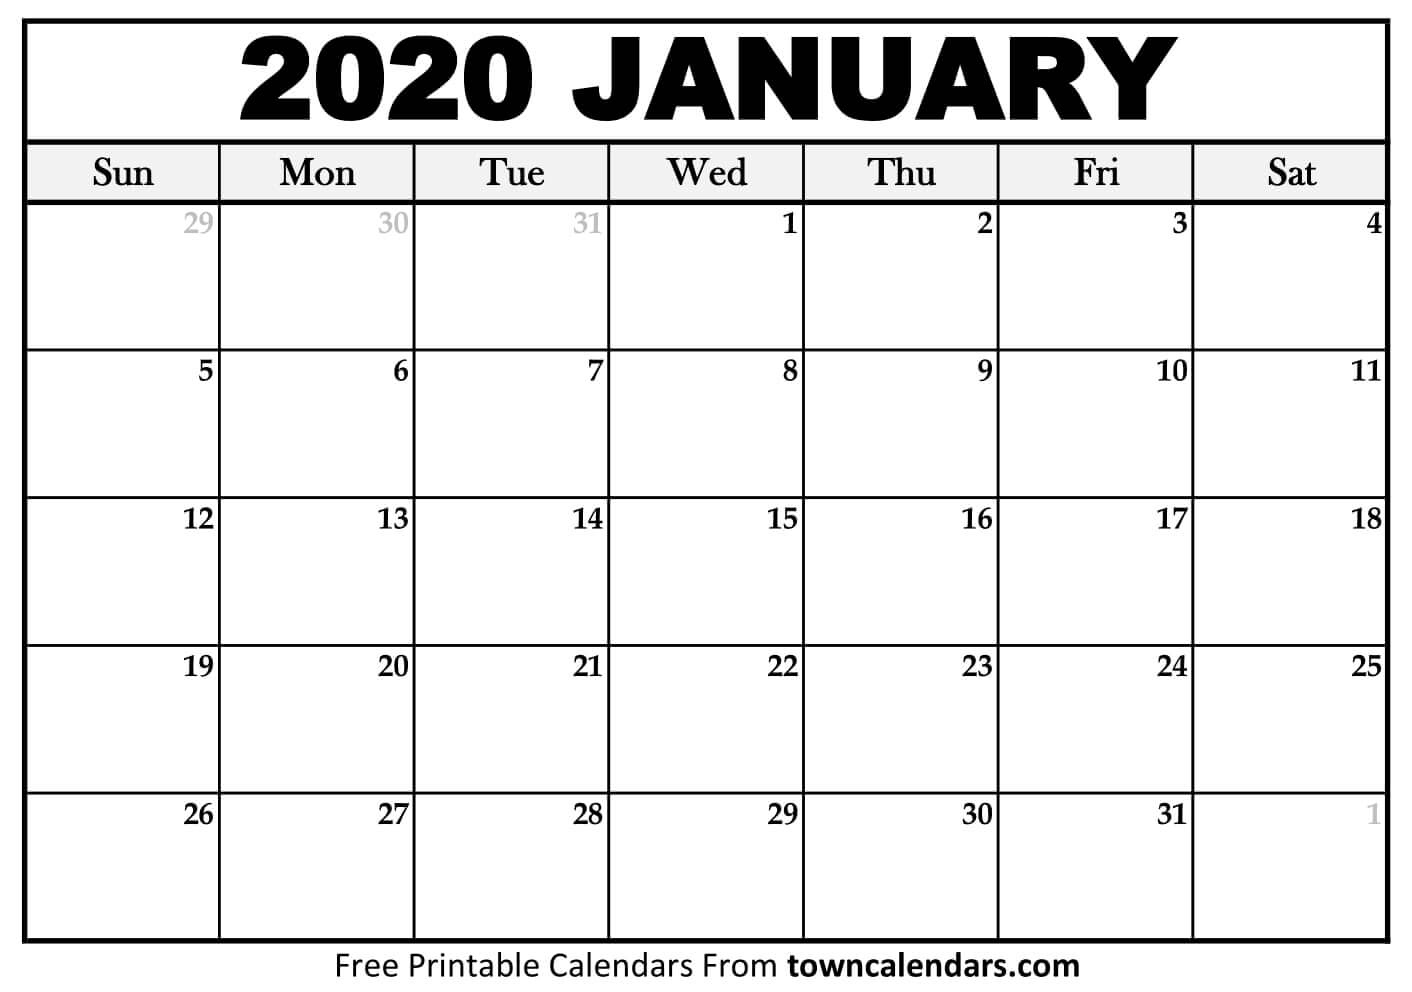 2020 Calendar Printable - Towncalendars Perky January 2020 Calendar Printable Free